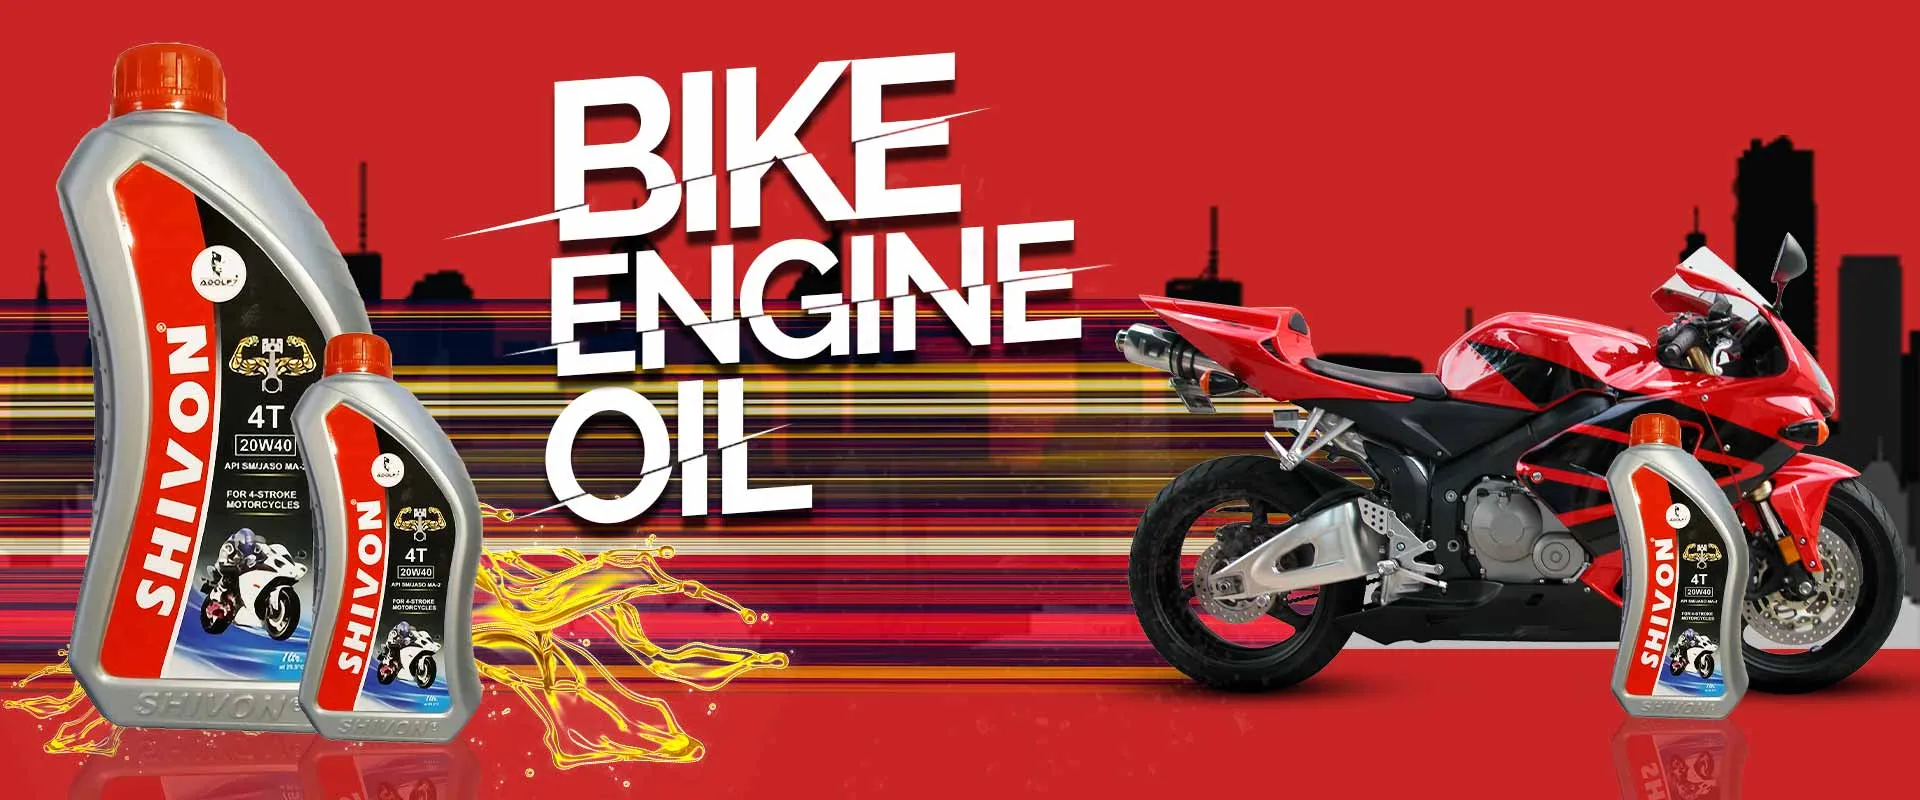 Bike Engine Oil In Paithan